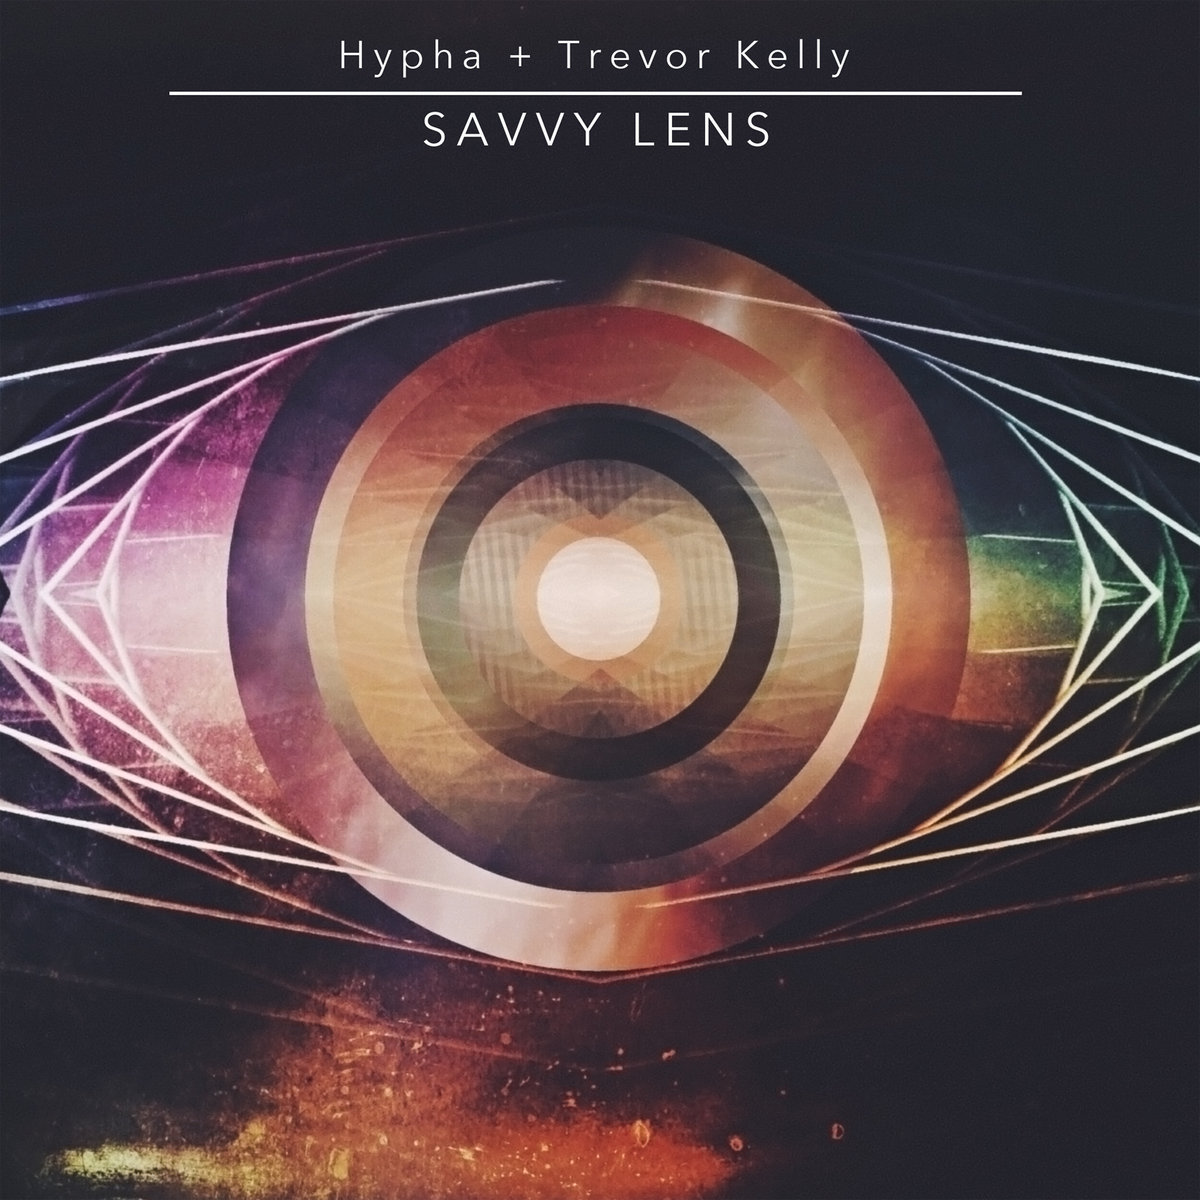 Hypha & Trevor Kelly - Savvy Lens @ 'Savvy Lens' album (Austin)